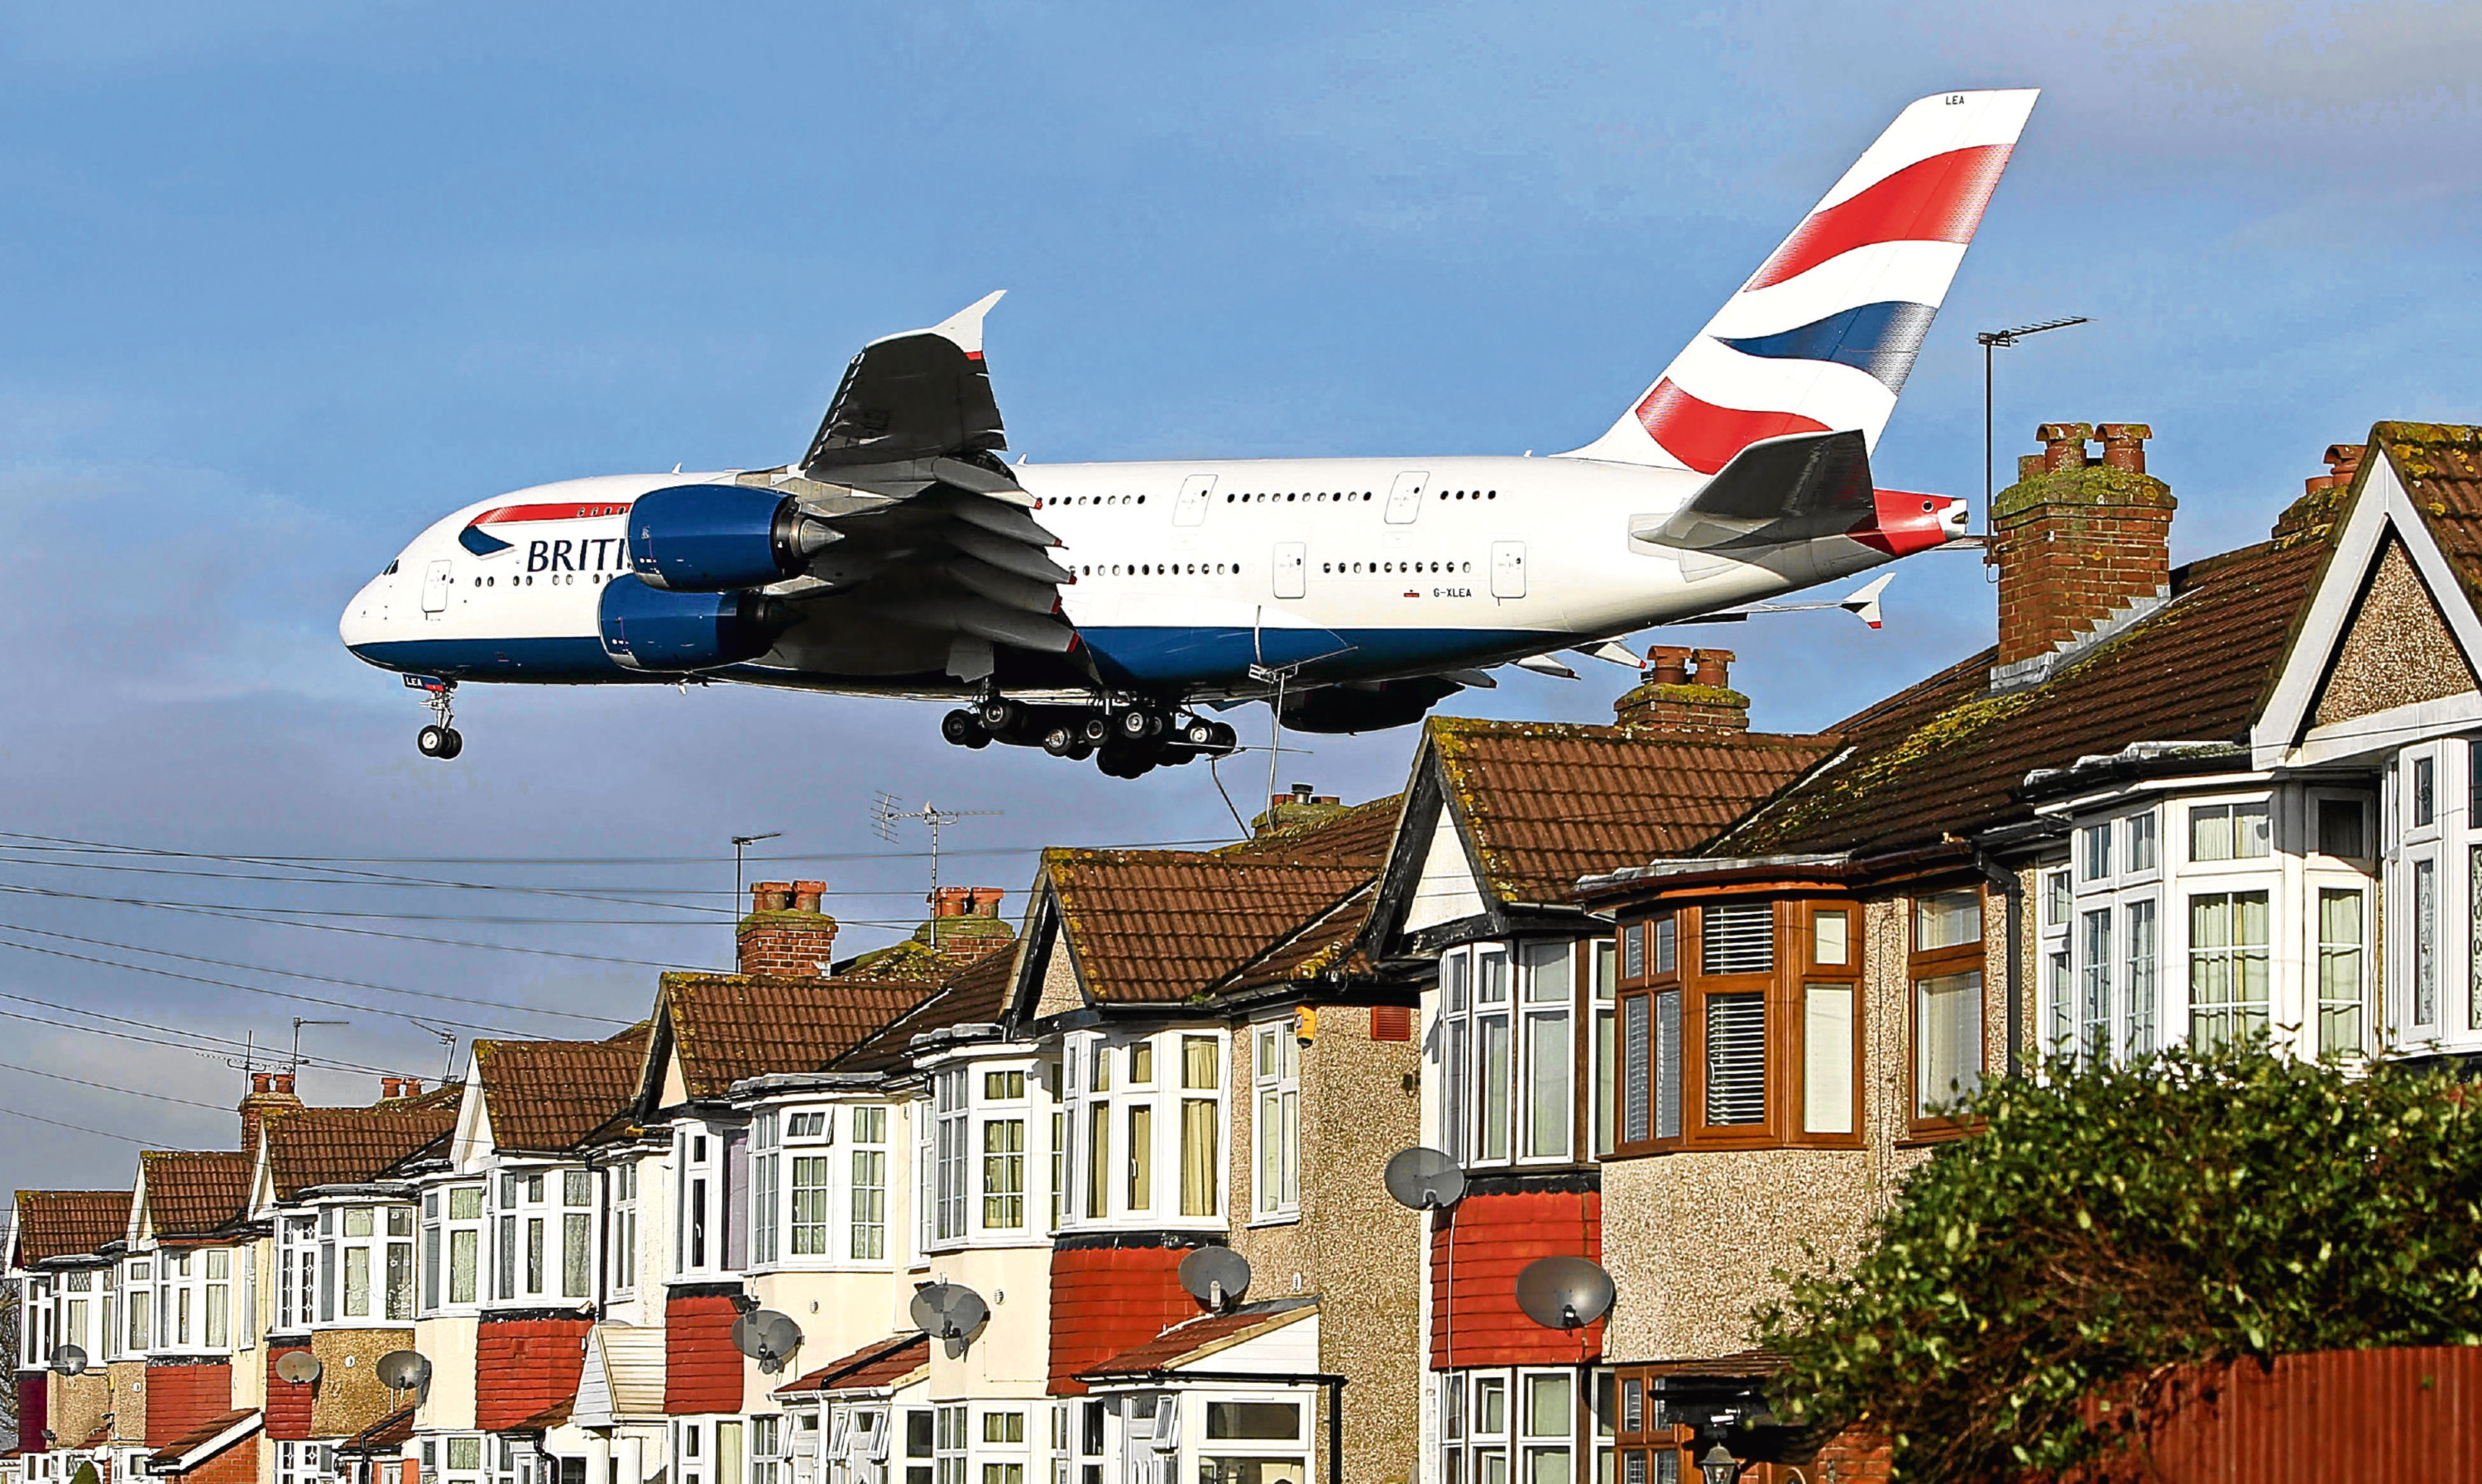 A British Airways flight coming into land at Heathrow